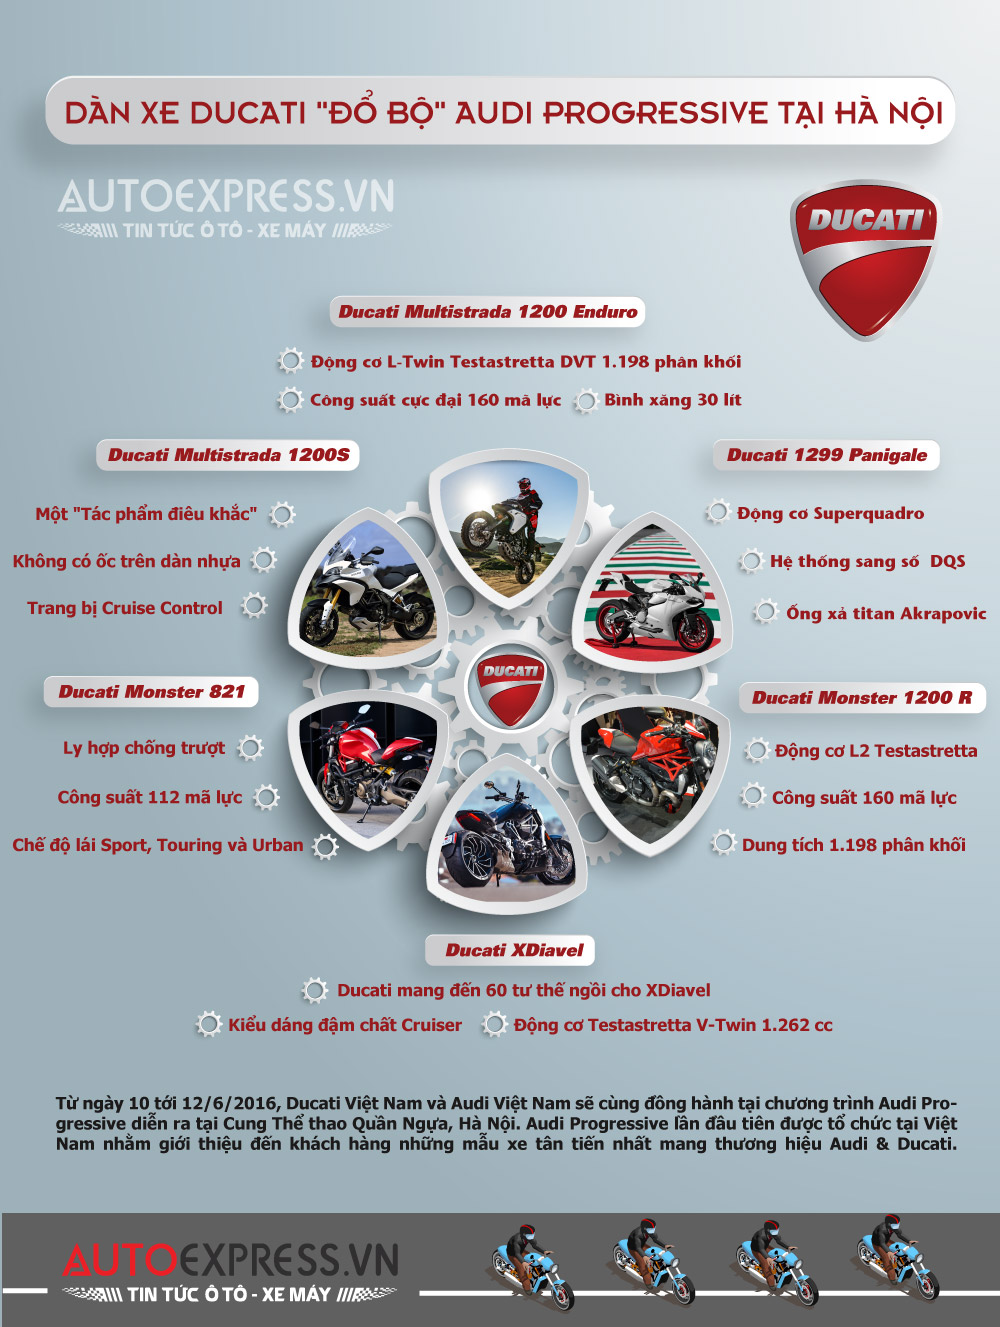 Dàn xe Ducati xuất hiện tại sự kiện Audi Progressive sắp diễn ra tại Hà Nội